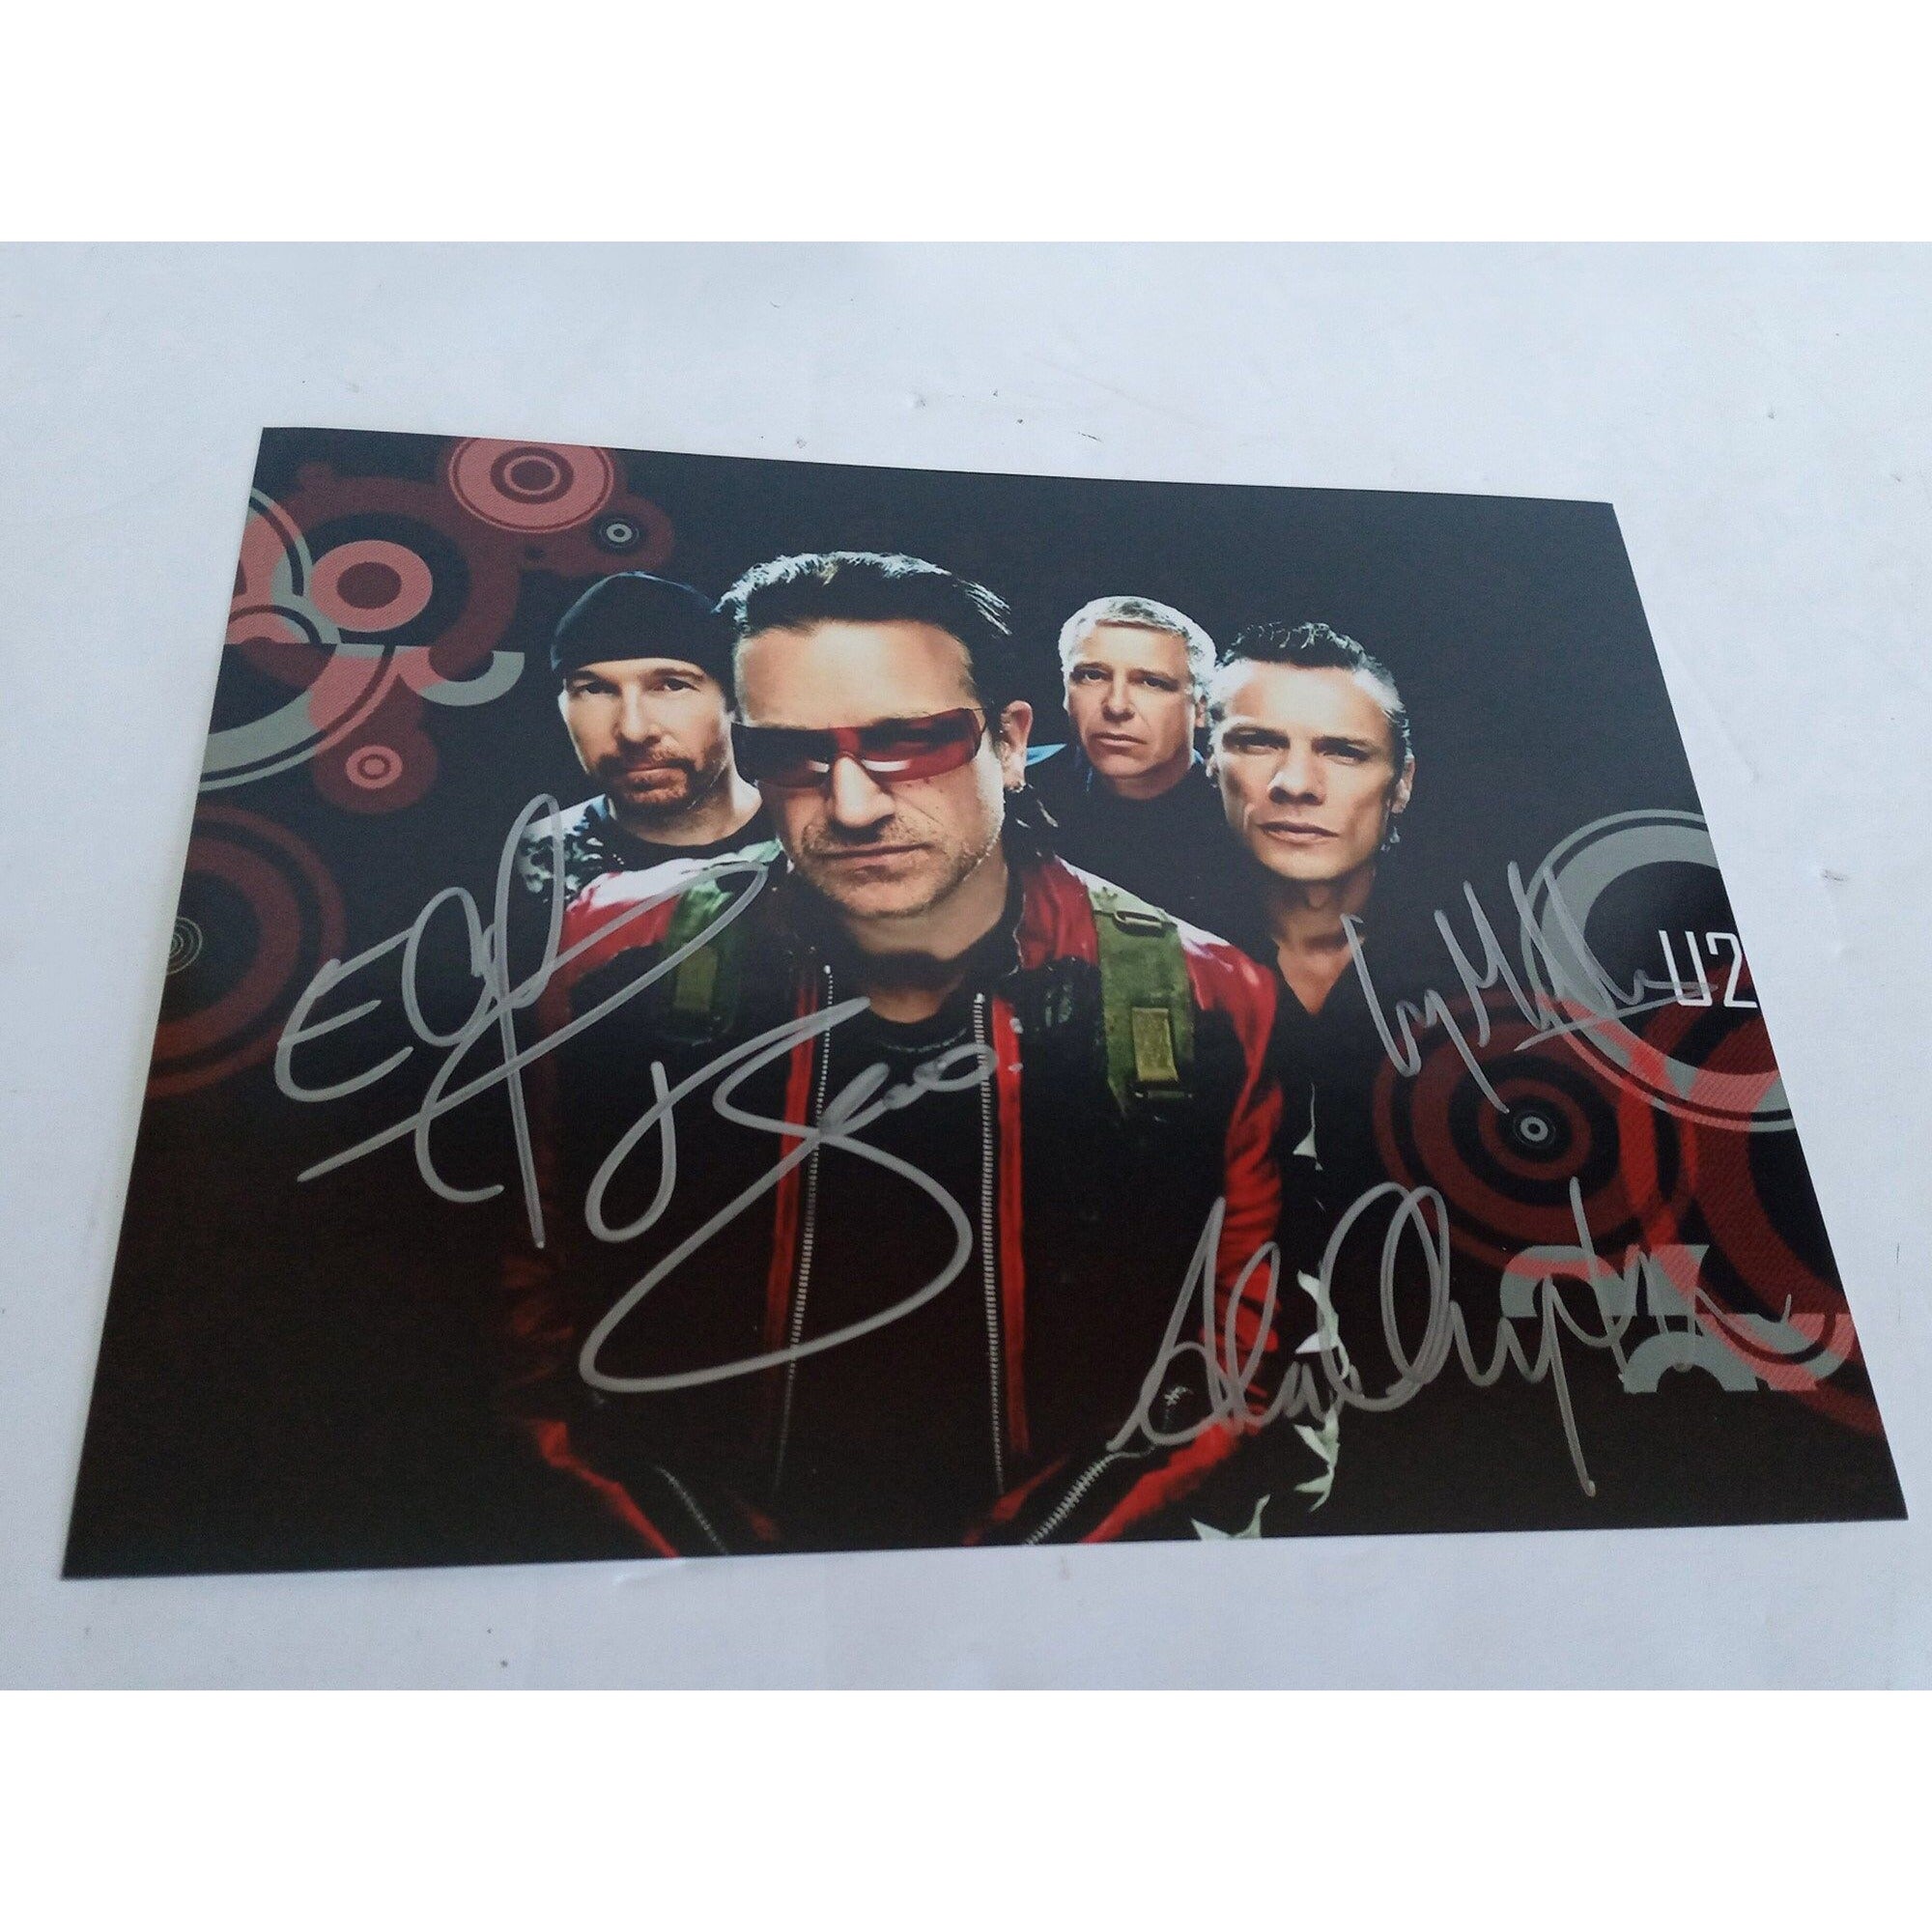 Bono The Edge Larry Mullen Adam Clayton 8 x 10 sign photo with proof